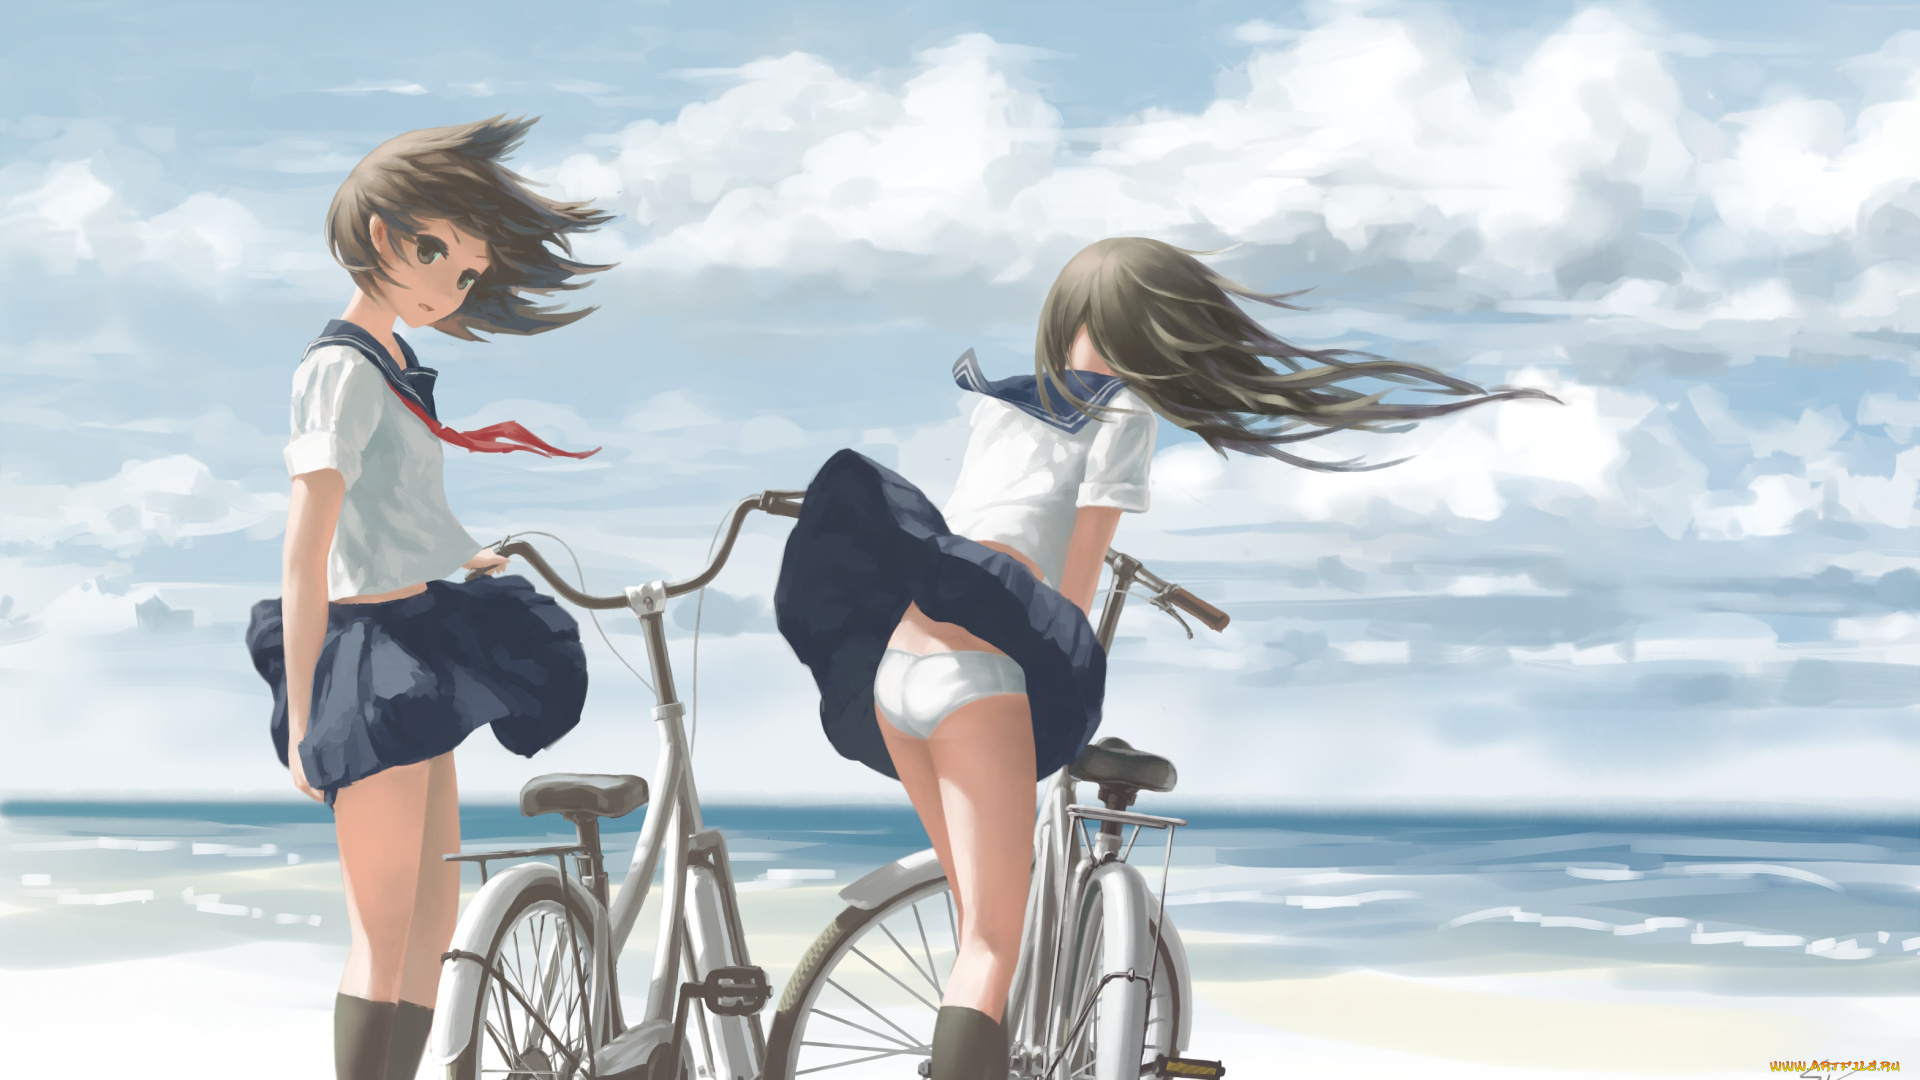 аниме, unknown, , другое, si-ruanmumu, арт, девушки, пляж, море, велосипед, облака, небо, ветер